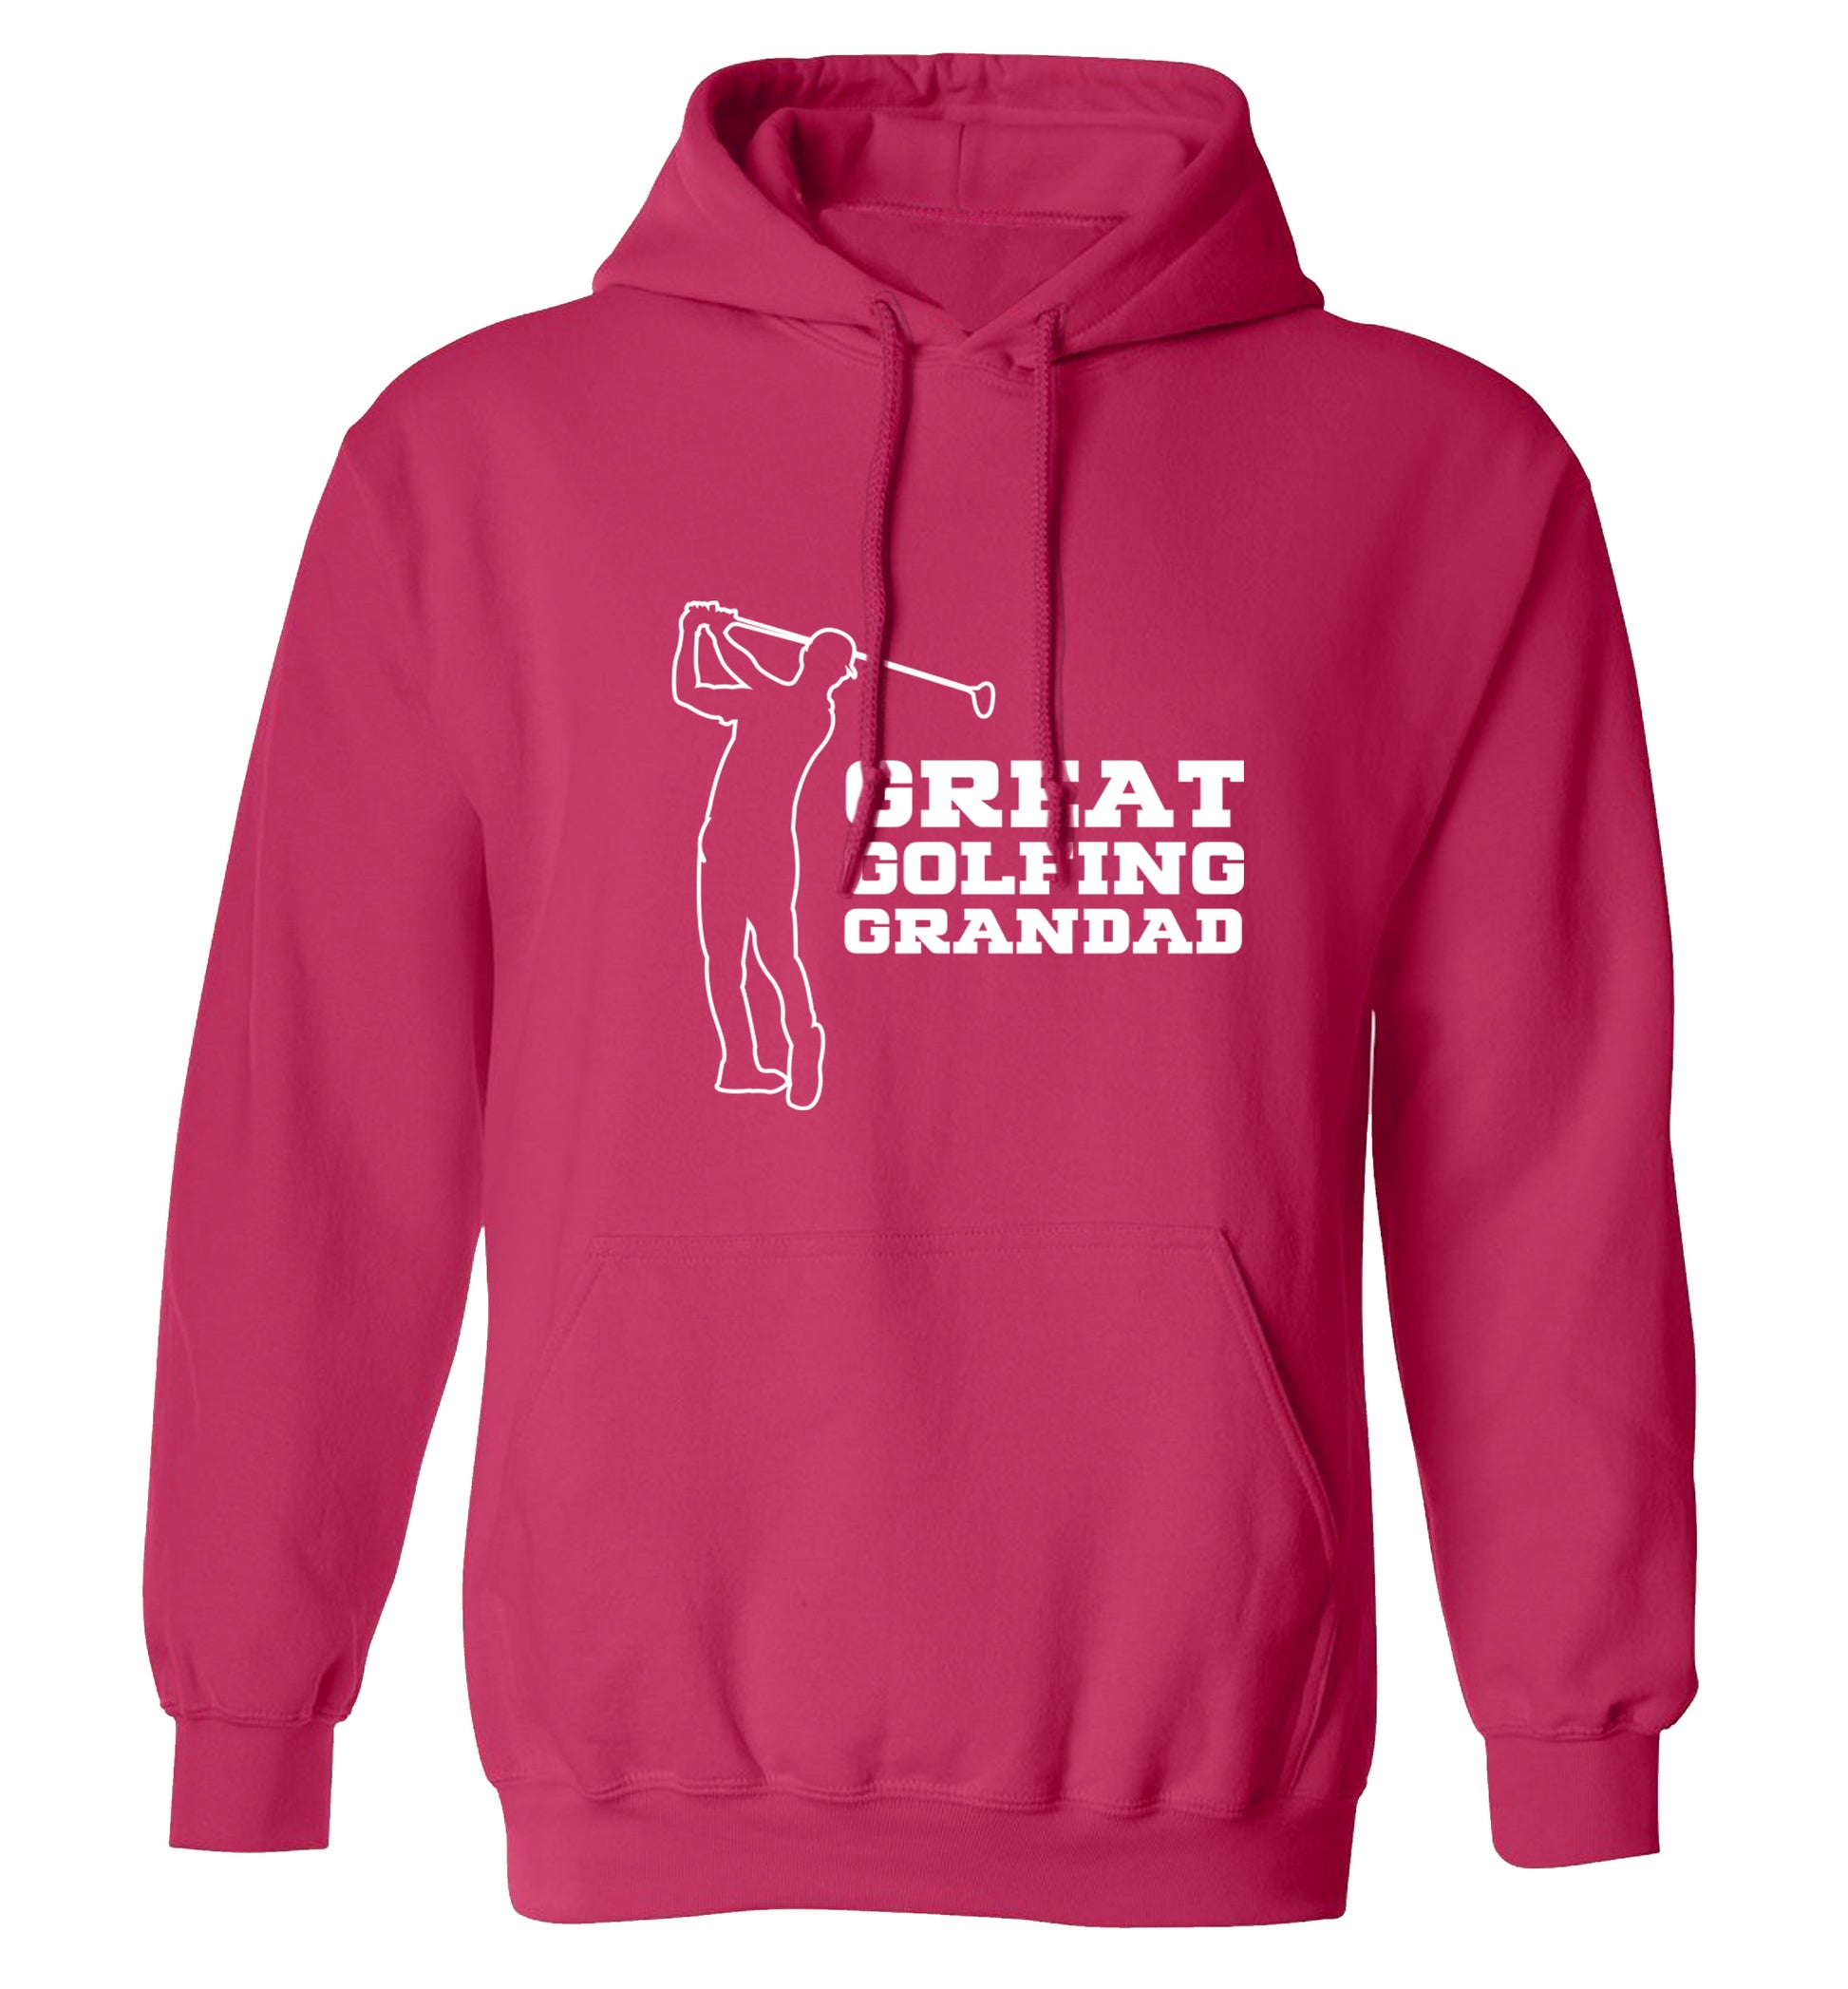 Great Golfing Grandad adults unisex pink hoodie 2XL